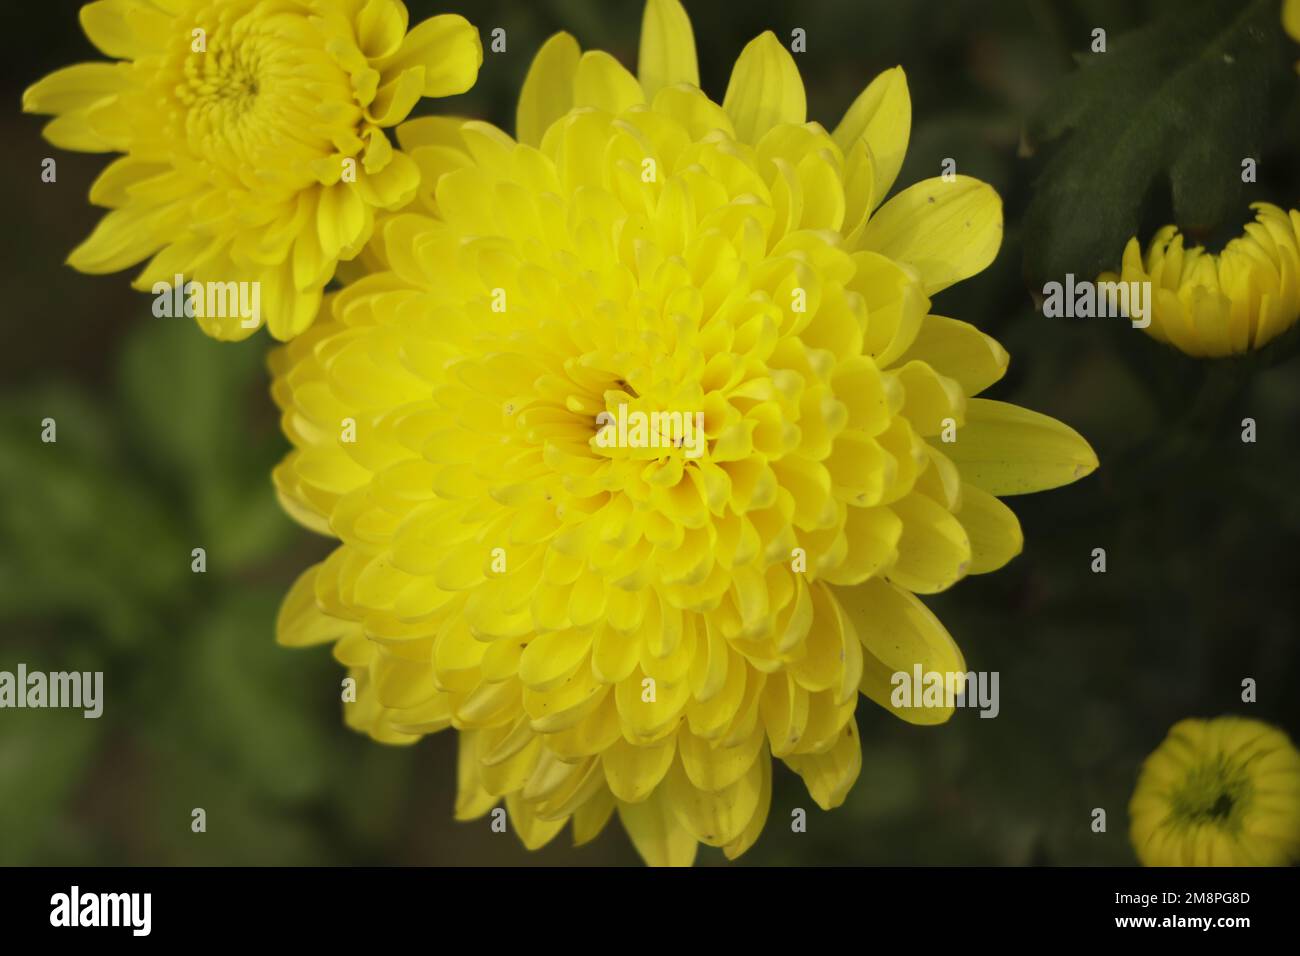 Florists Daisy or yellow Chrysanthemum in garden Stock Photo